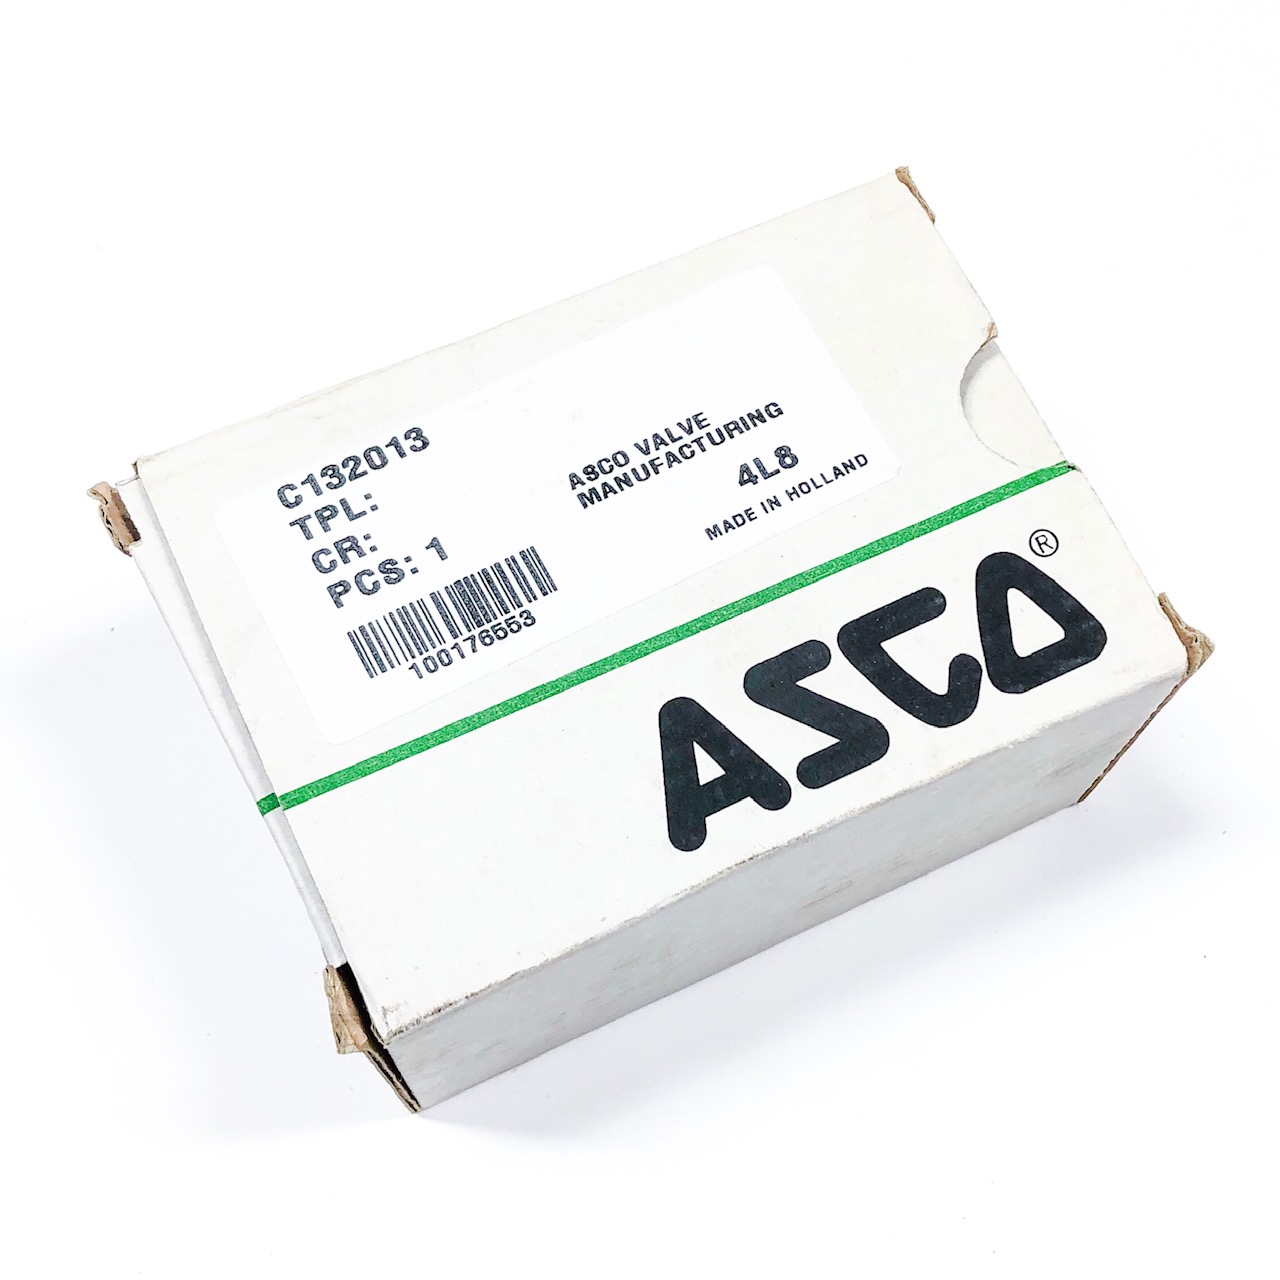 C132-013 Asco Spare Part Kit Series 353 4